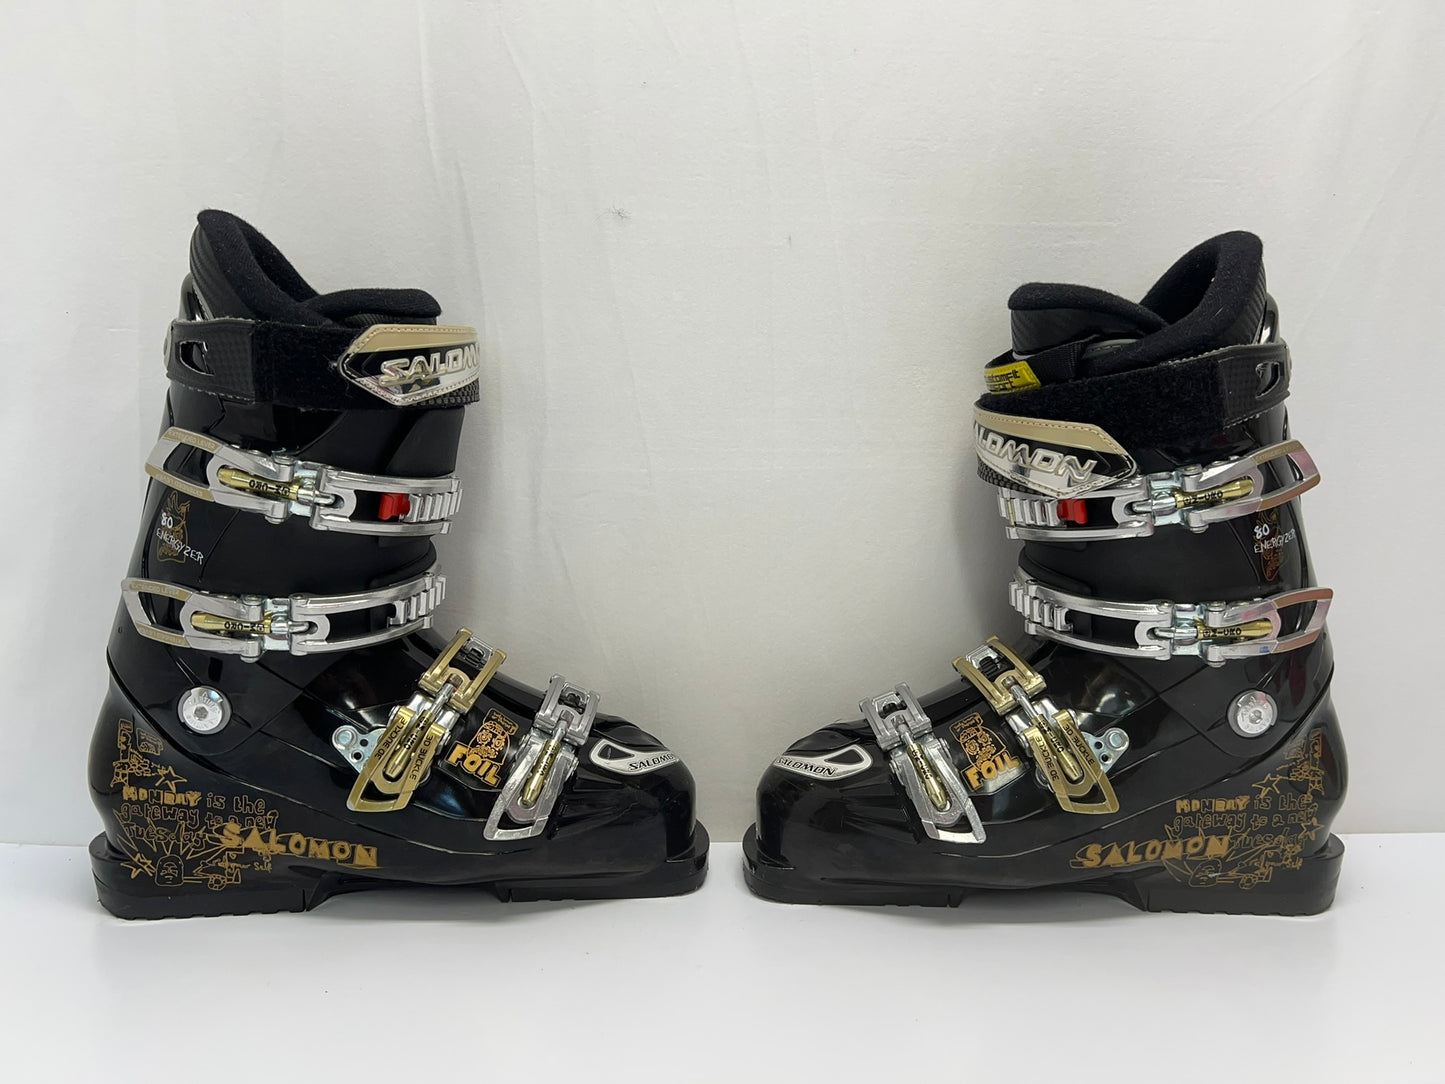 Ski Boots Mondo Size 26.5 Men's Size 8.5 Ladies Size 9.5 307 mm Salomon Foil Black And Gold New Demo Model